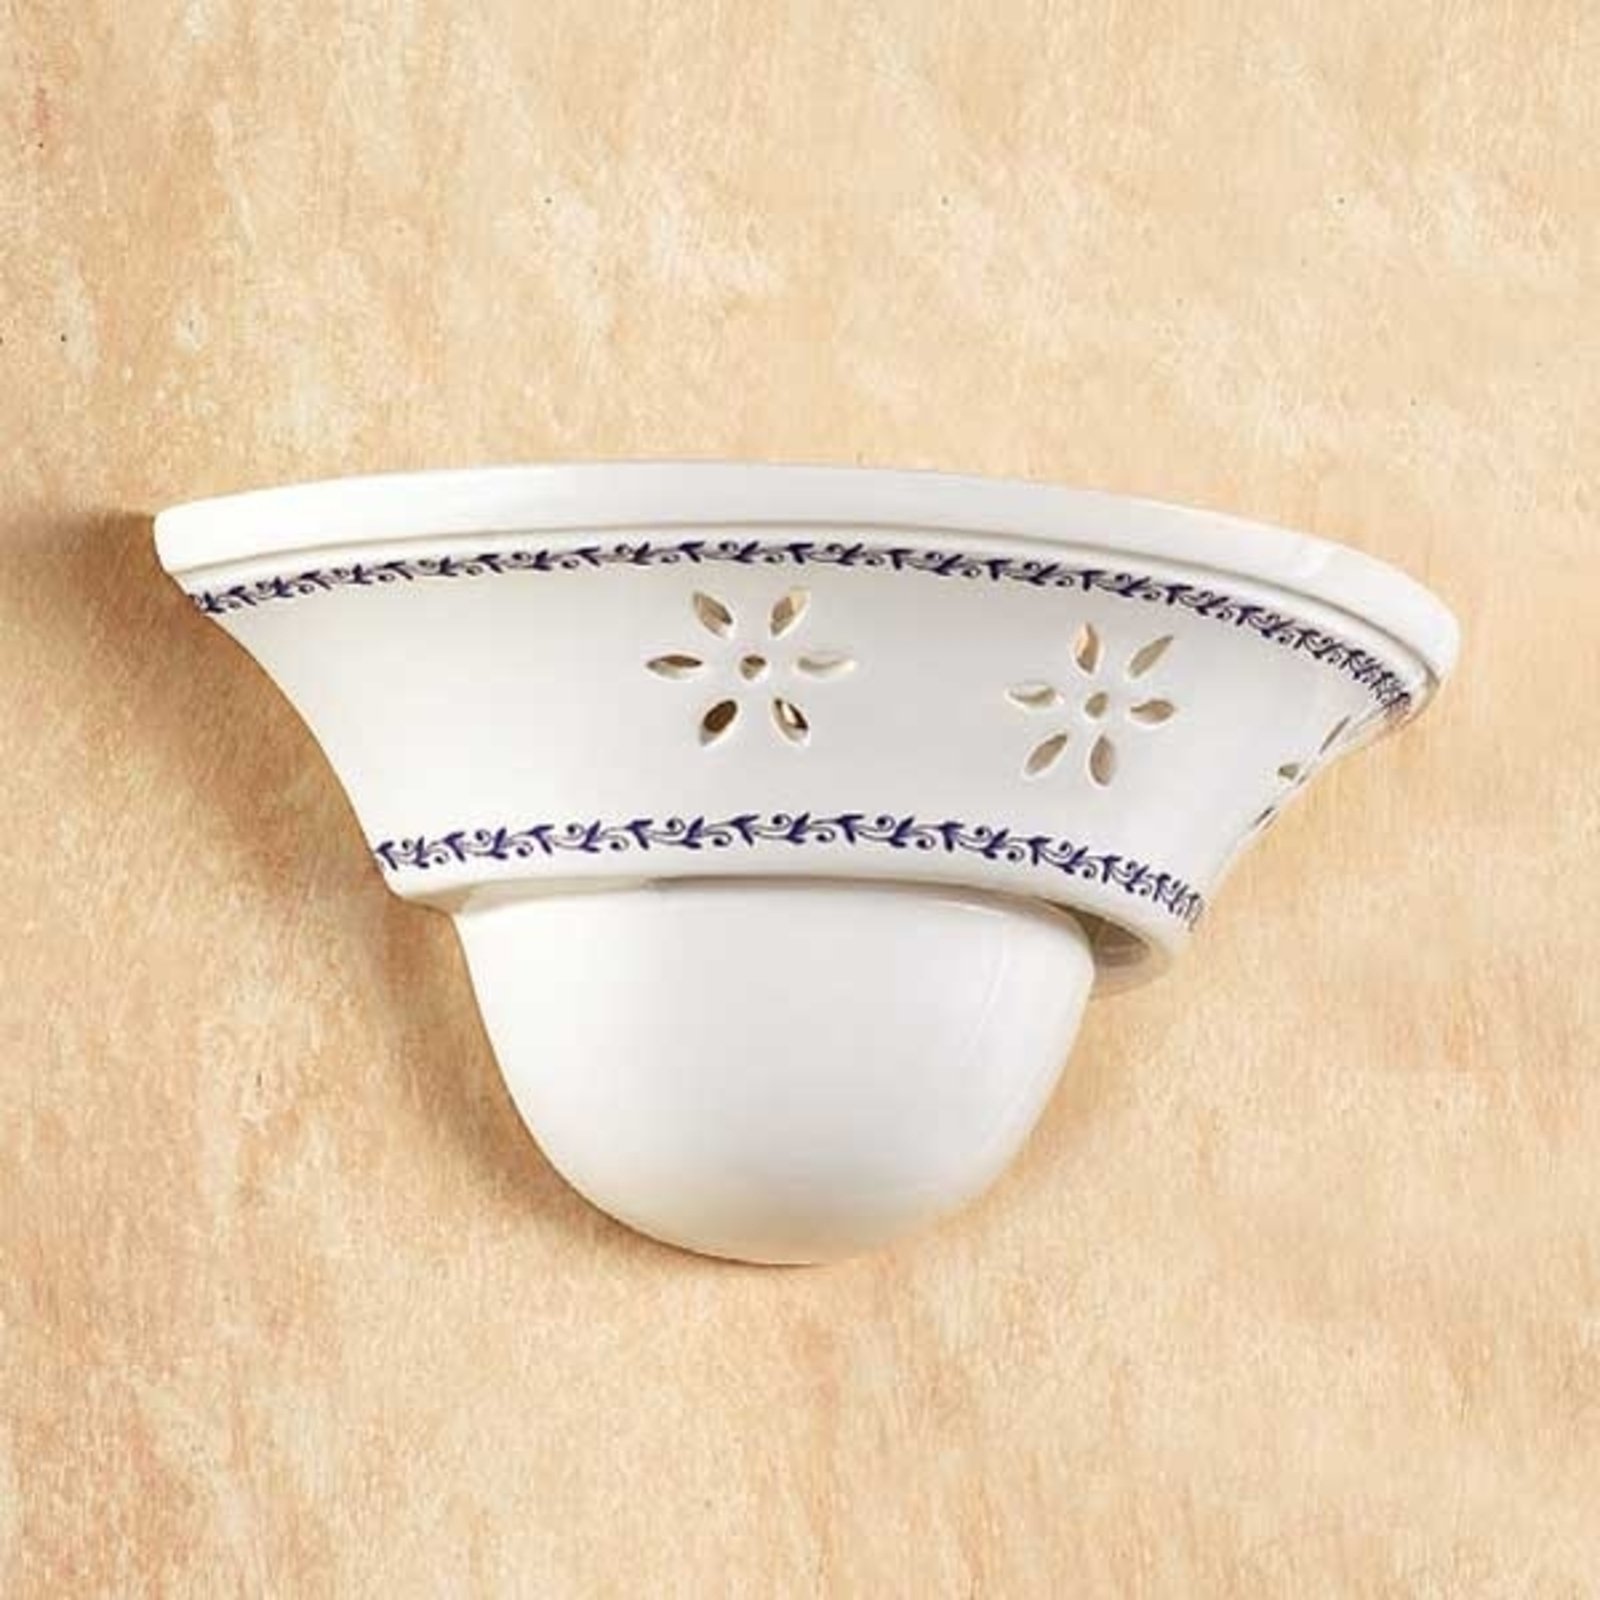 Elegant IL PUNTI wall light with a ceramic bowl